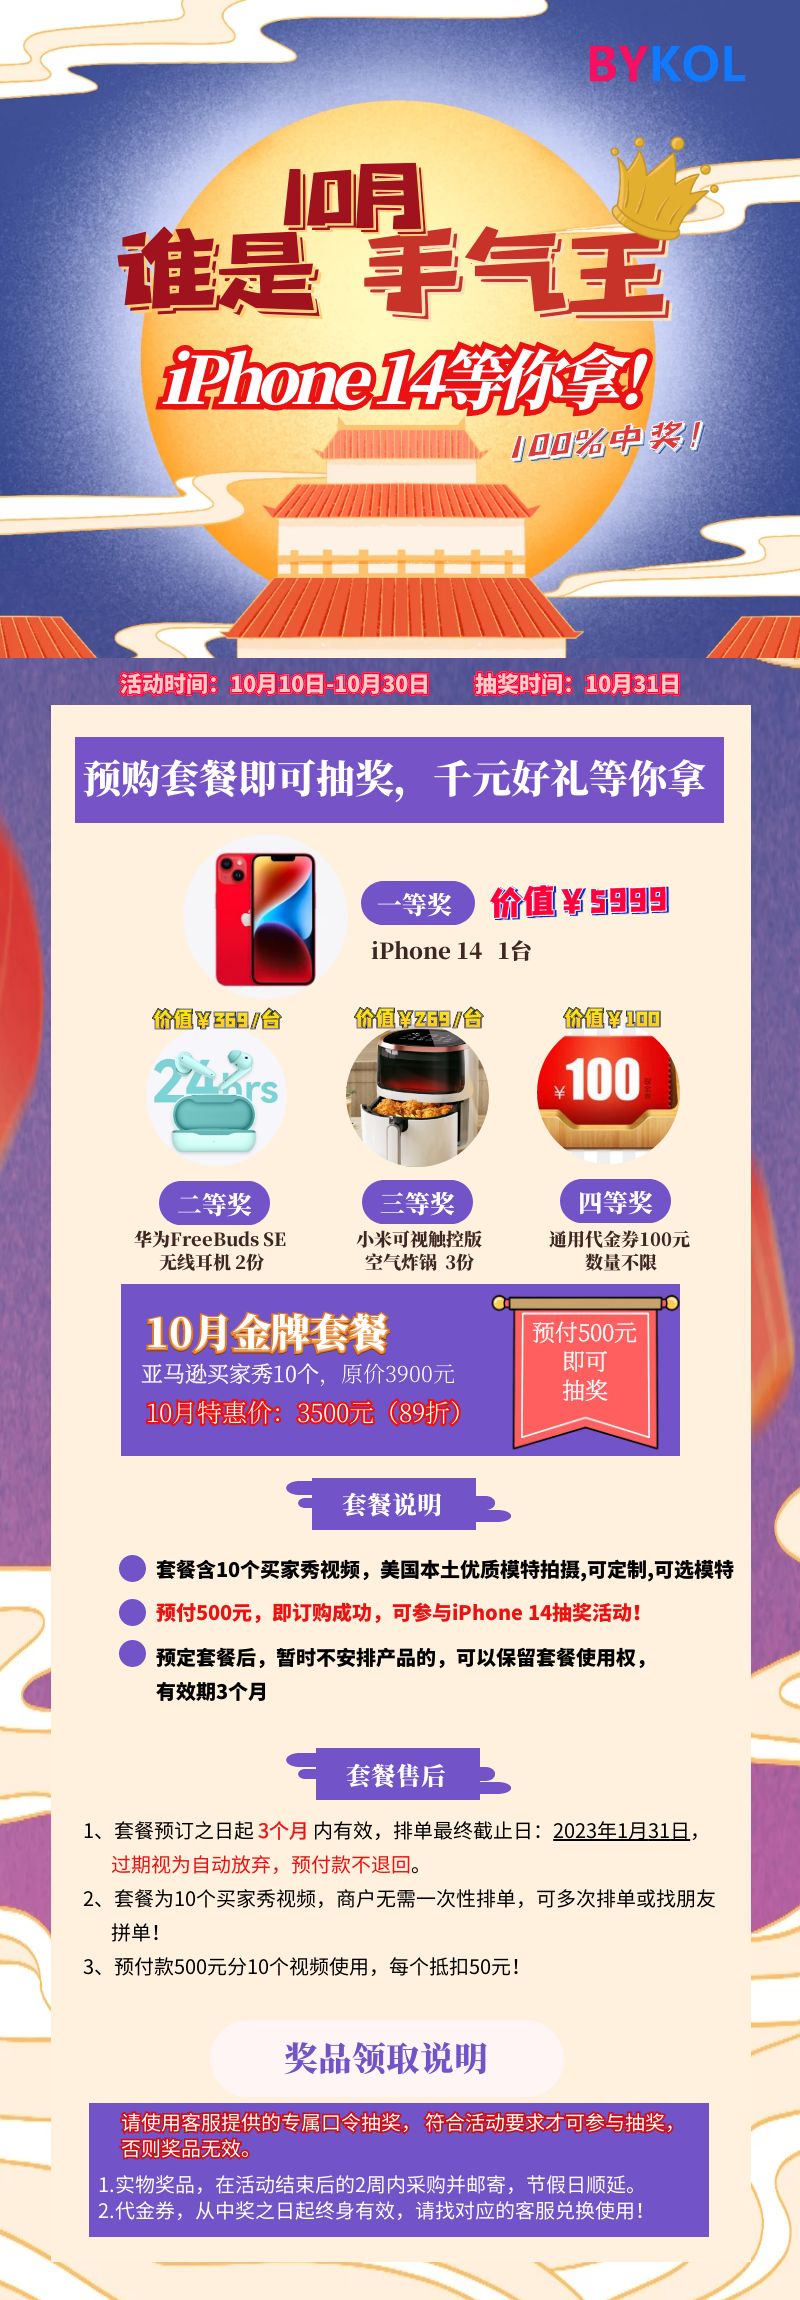 BYKOL-10月买家秀套餐 500元抽iPhone14.jpg